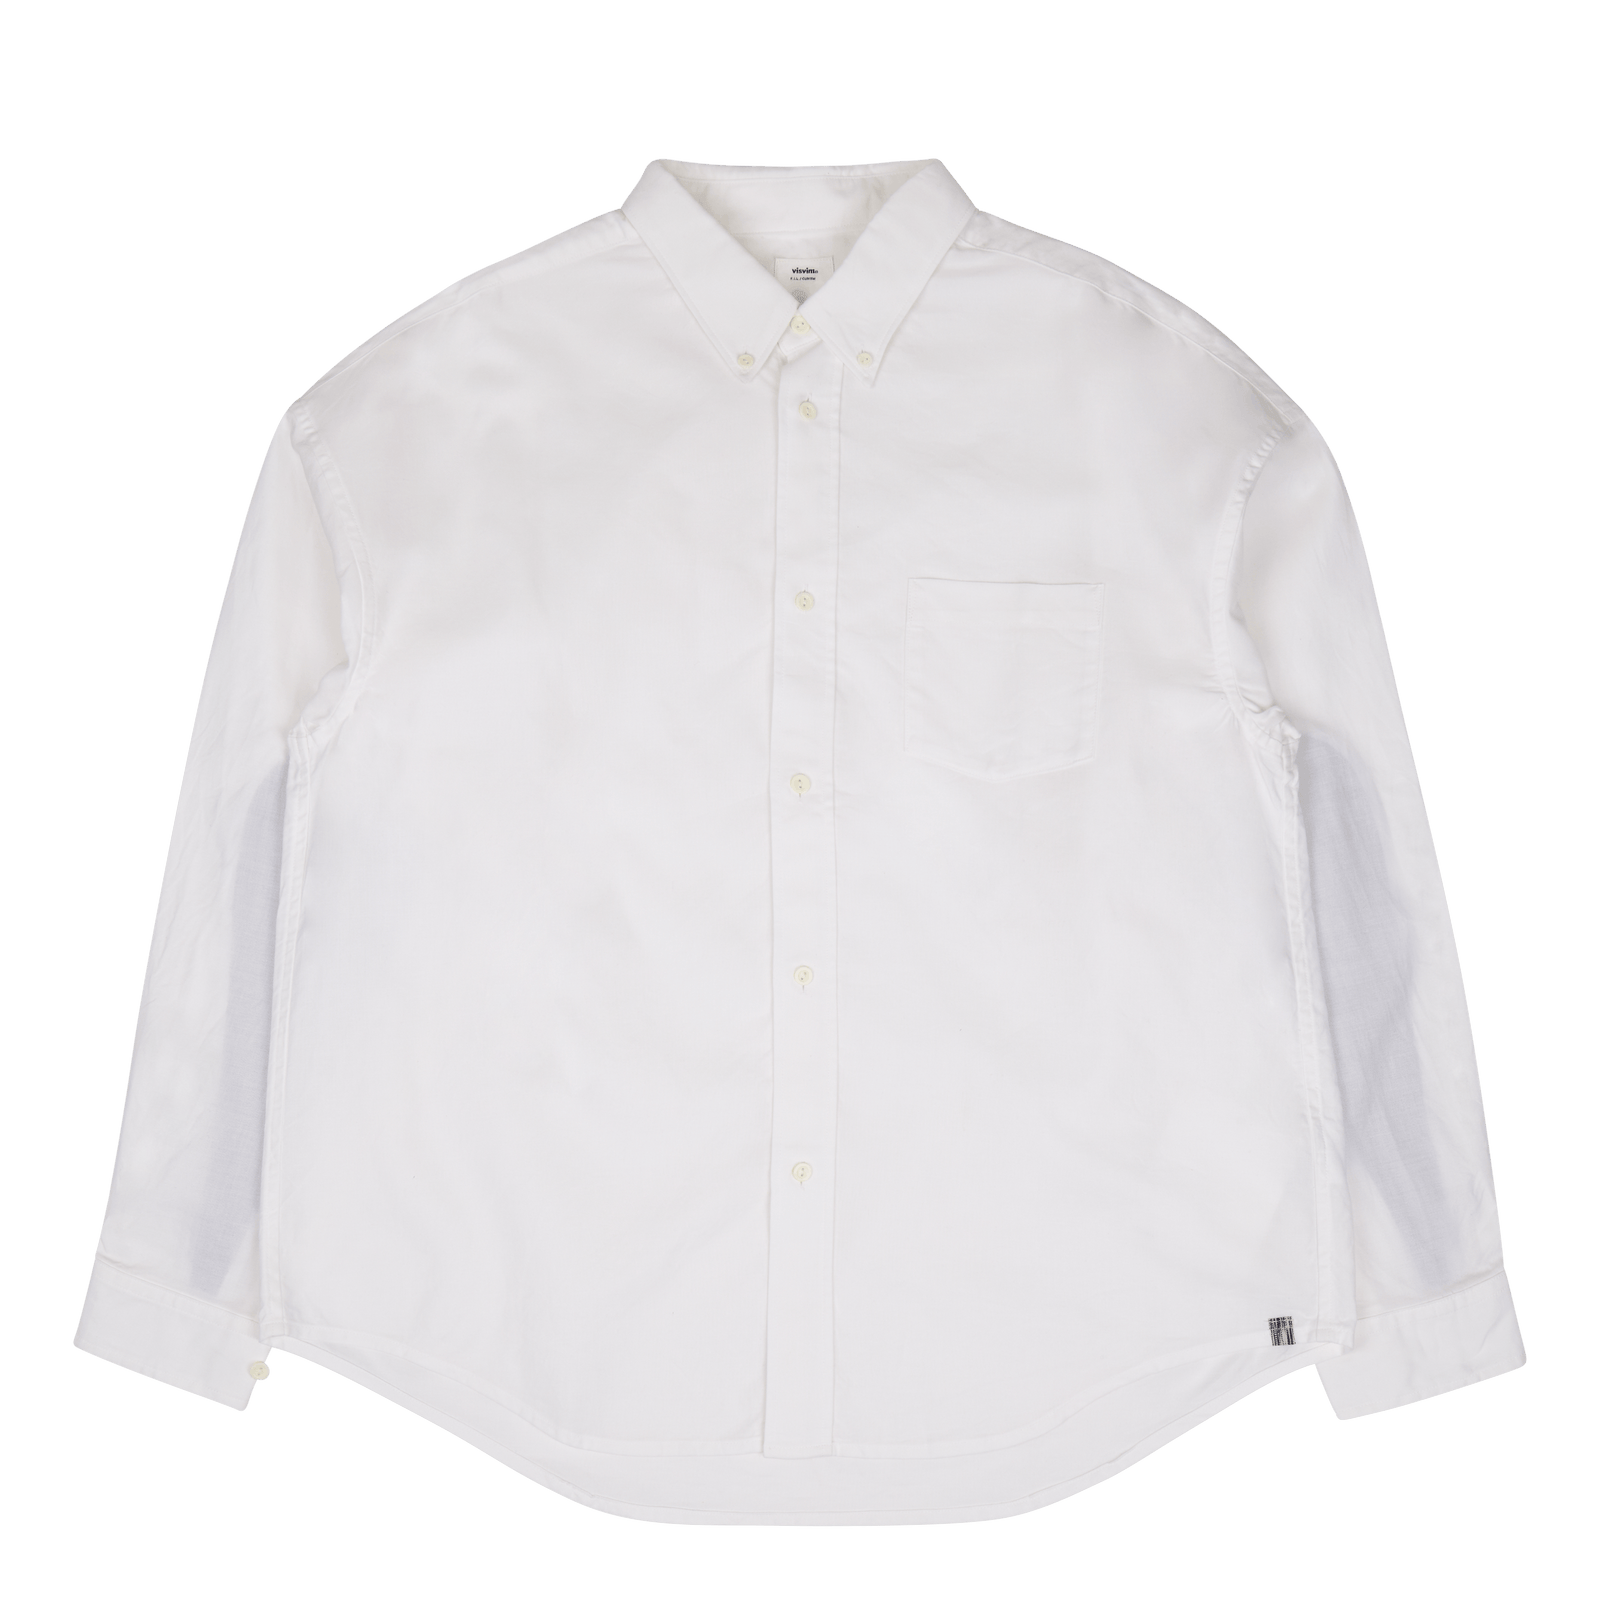 超大特価 - VISVIM Albacore Long SHIRT B.D B.D. Shirt L/S L/S S ...